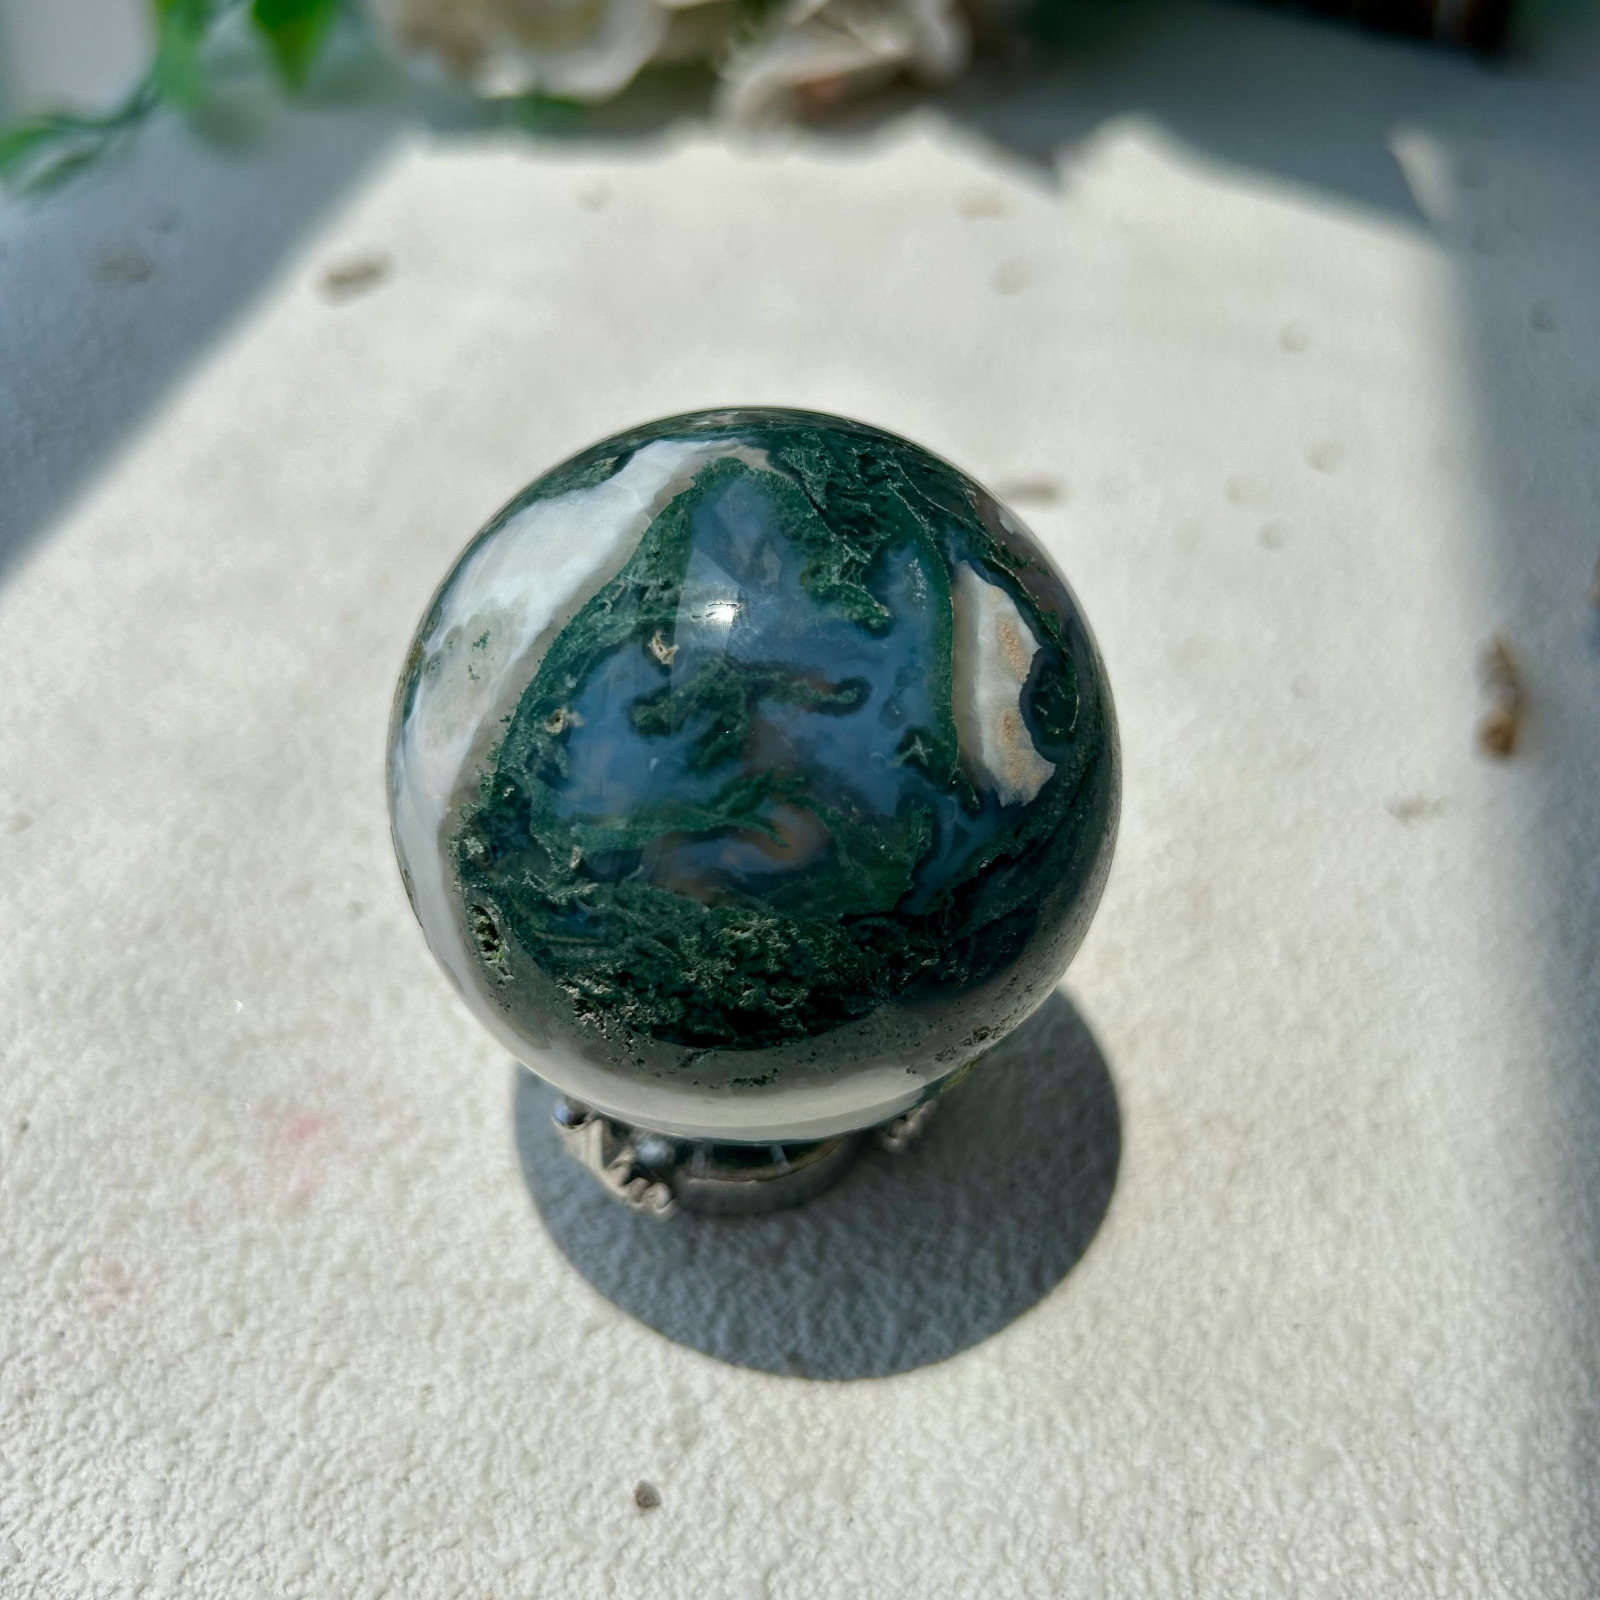 56mm 225g Natural Druzy Moss Agate Sphere Ball Quartz Crystal Healing 57th